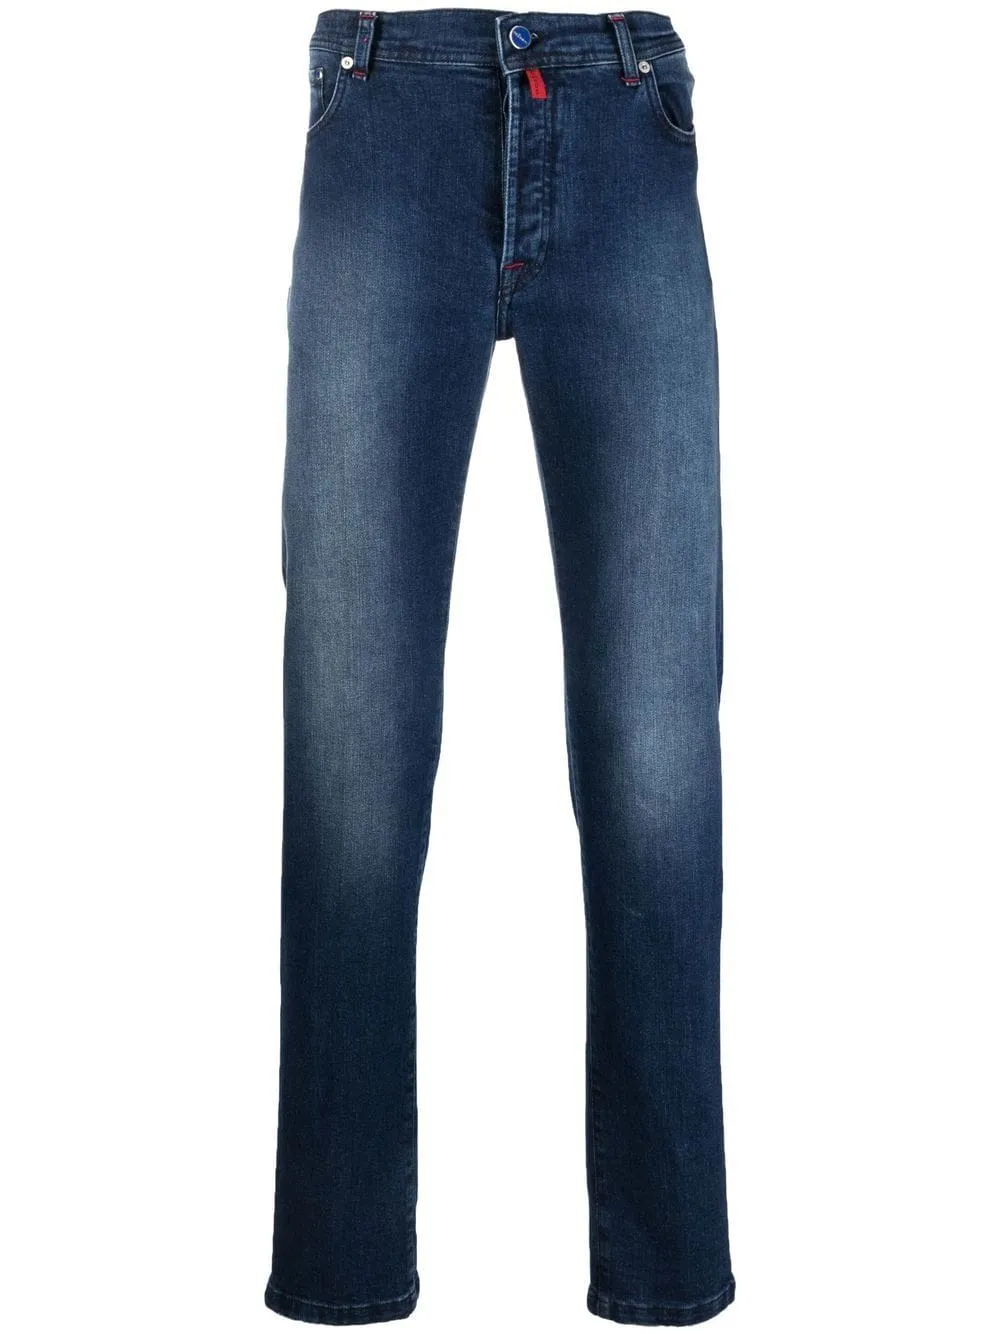 Designer Jeans Men Kiton Mid-rise Straight-leg Jeans Spring Autumn Long Pants for Man New Style Denim Trousers